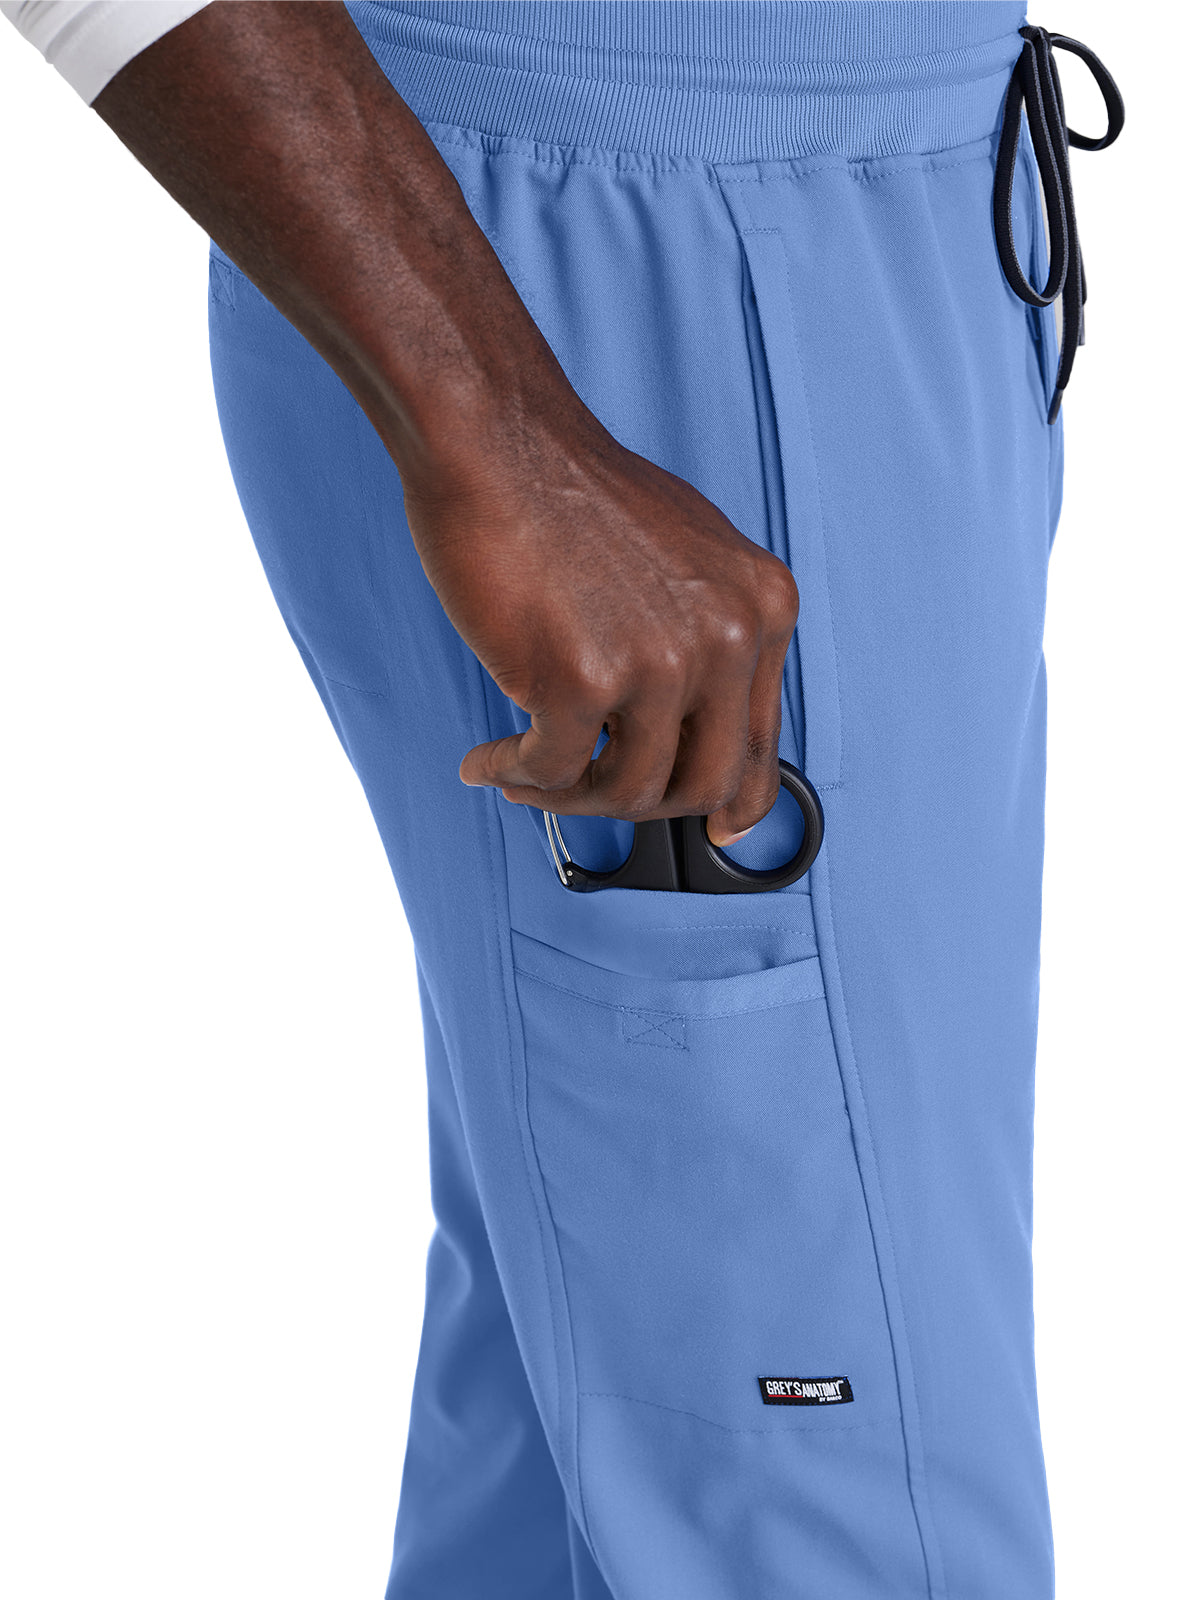 Men's 6 Pocket Straight Scrub Pant - GRSP617 - Ciel Blue